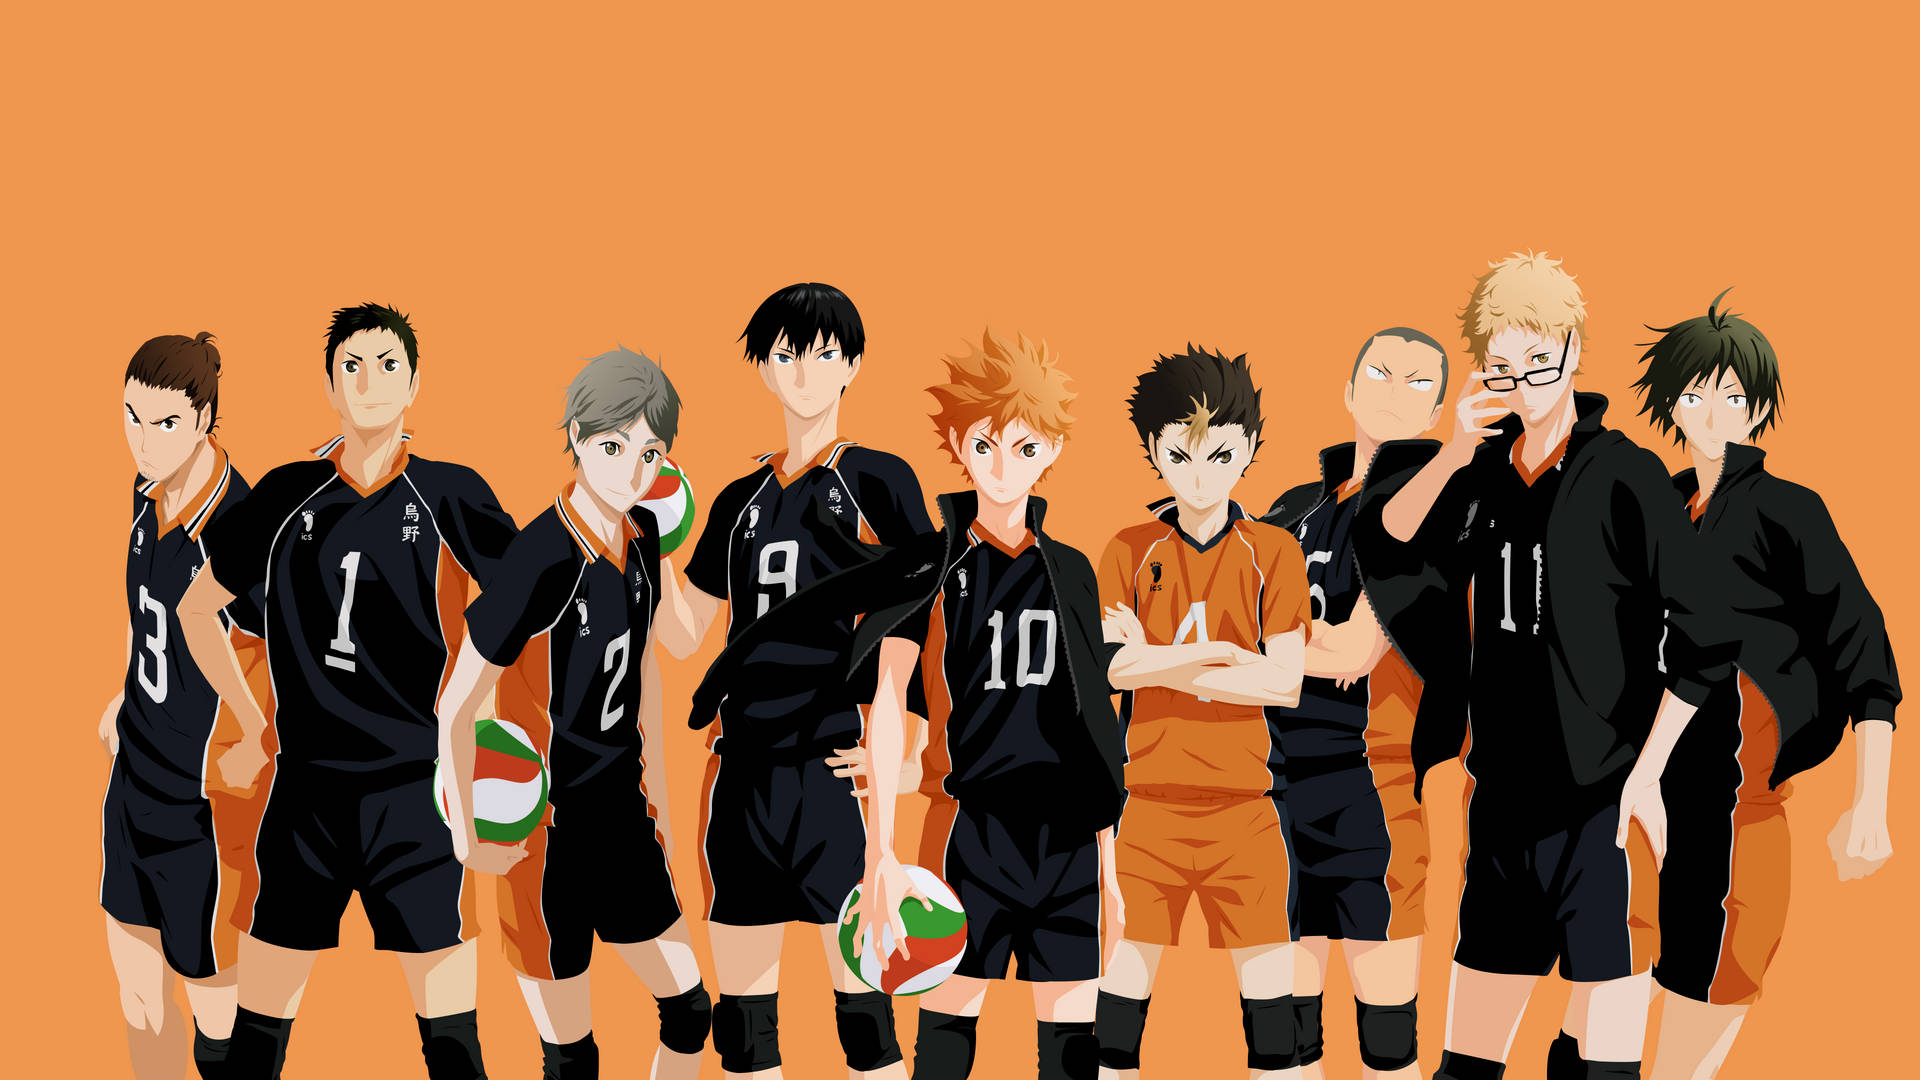 Haikyuu Teams In Volleyball Jerseys